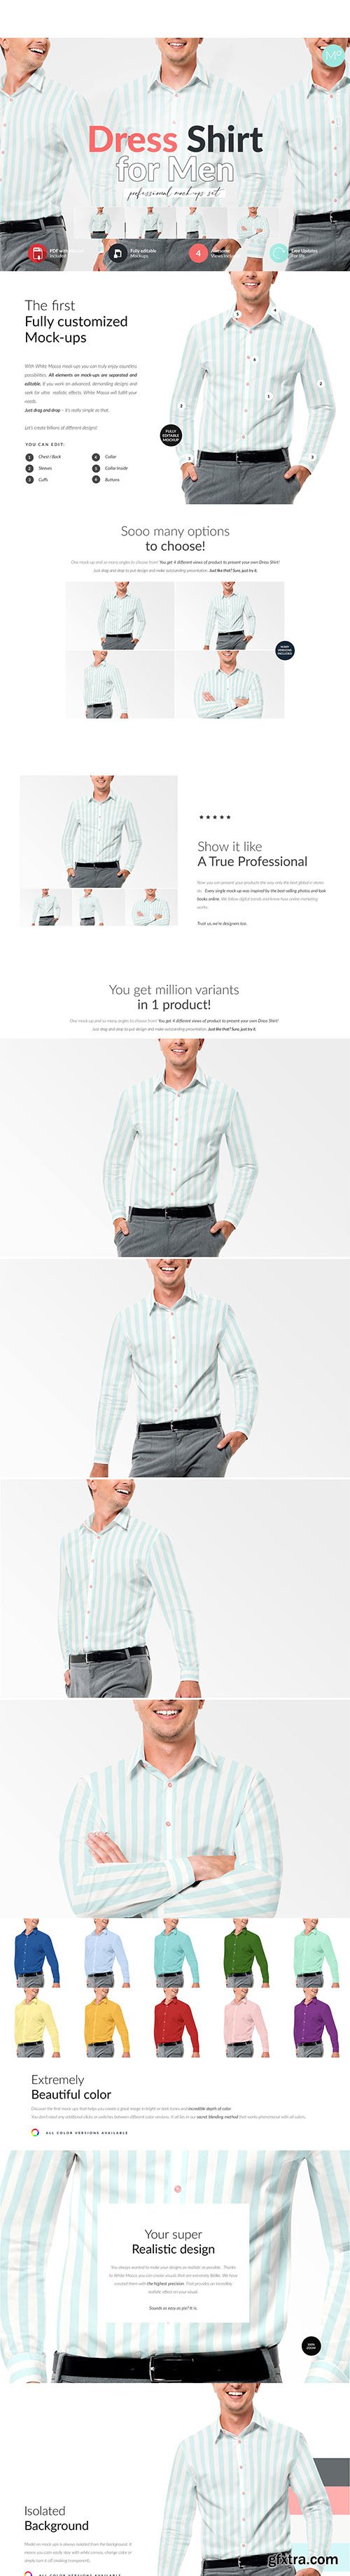 CreativeMarket - Dress Shirt for Men Mock-ups Set 6056708